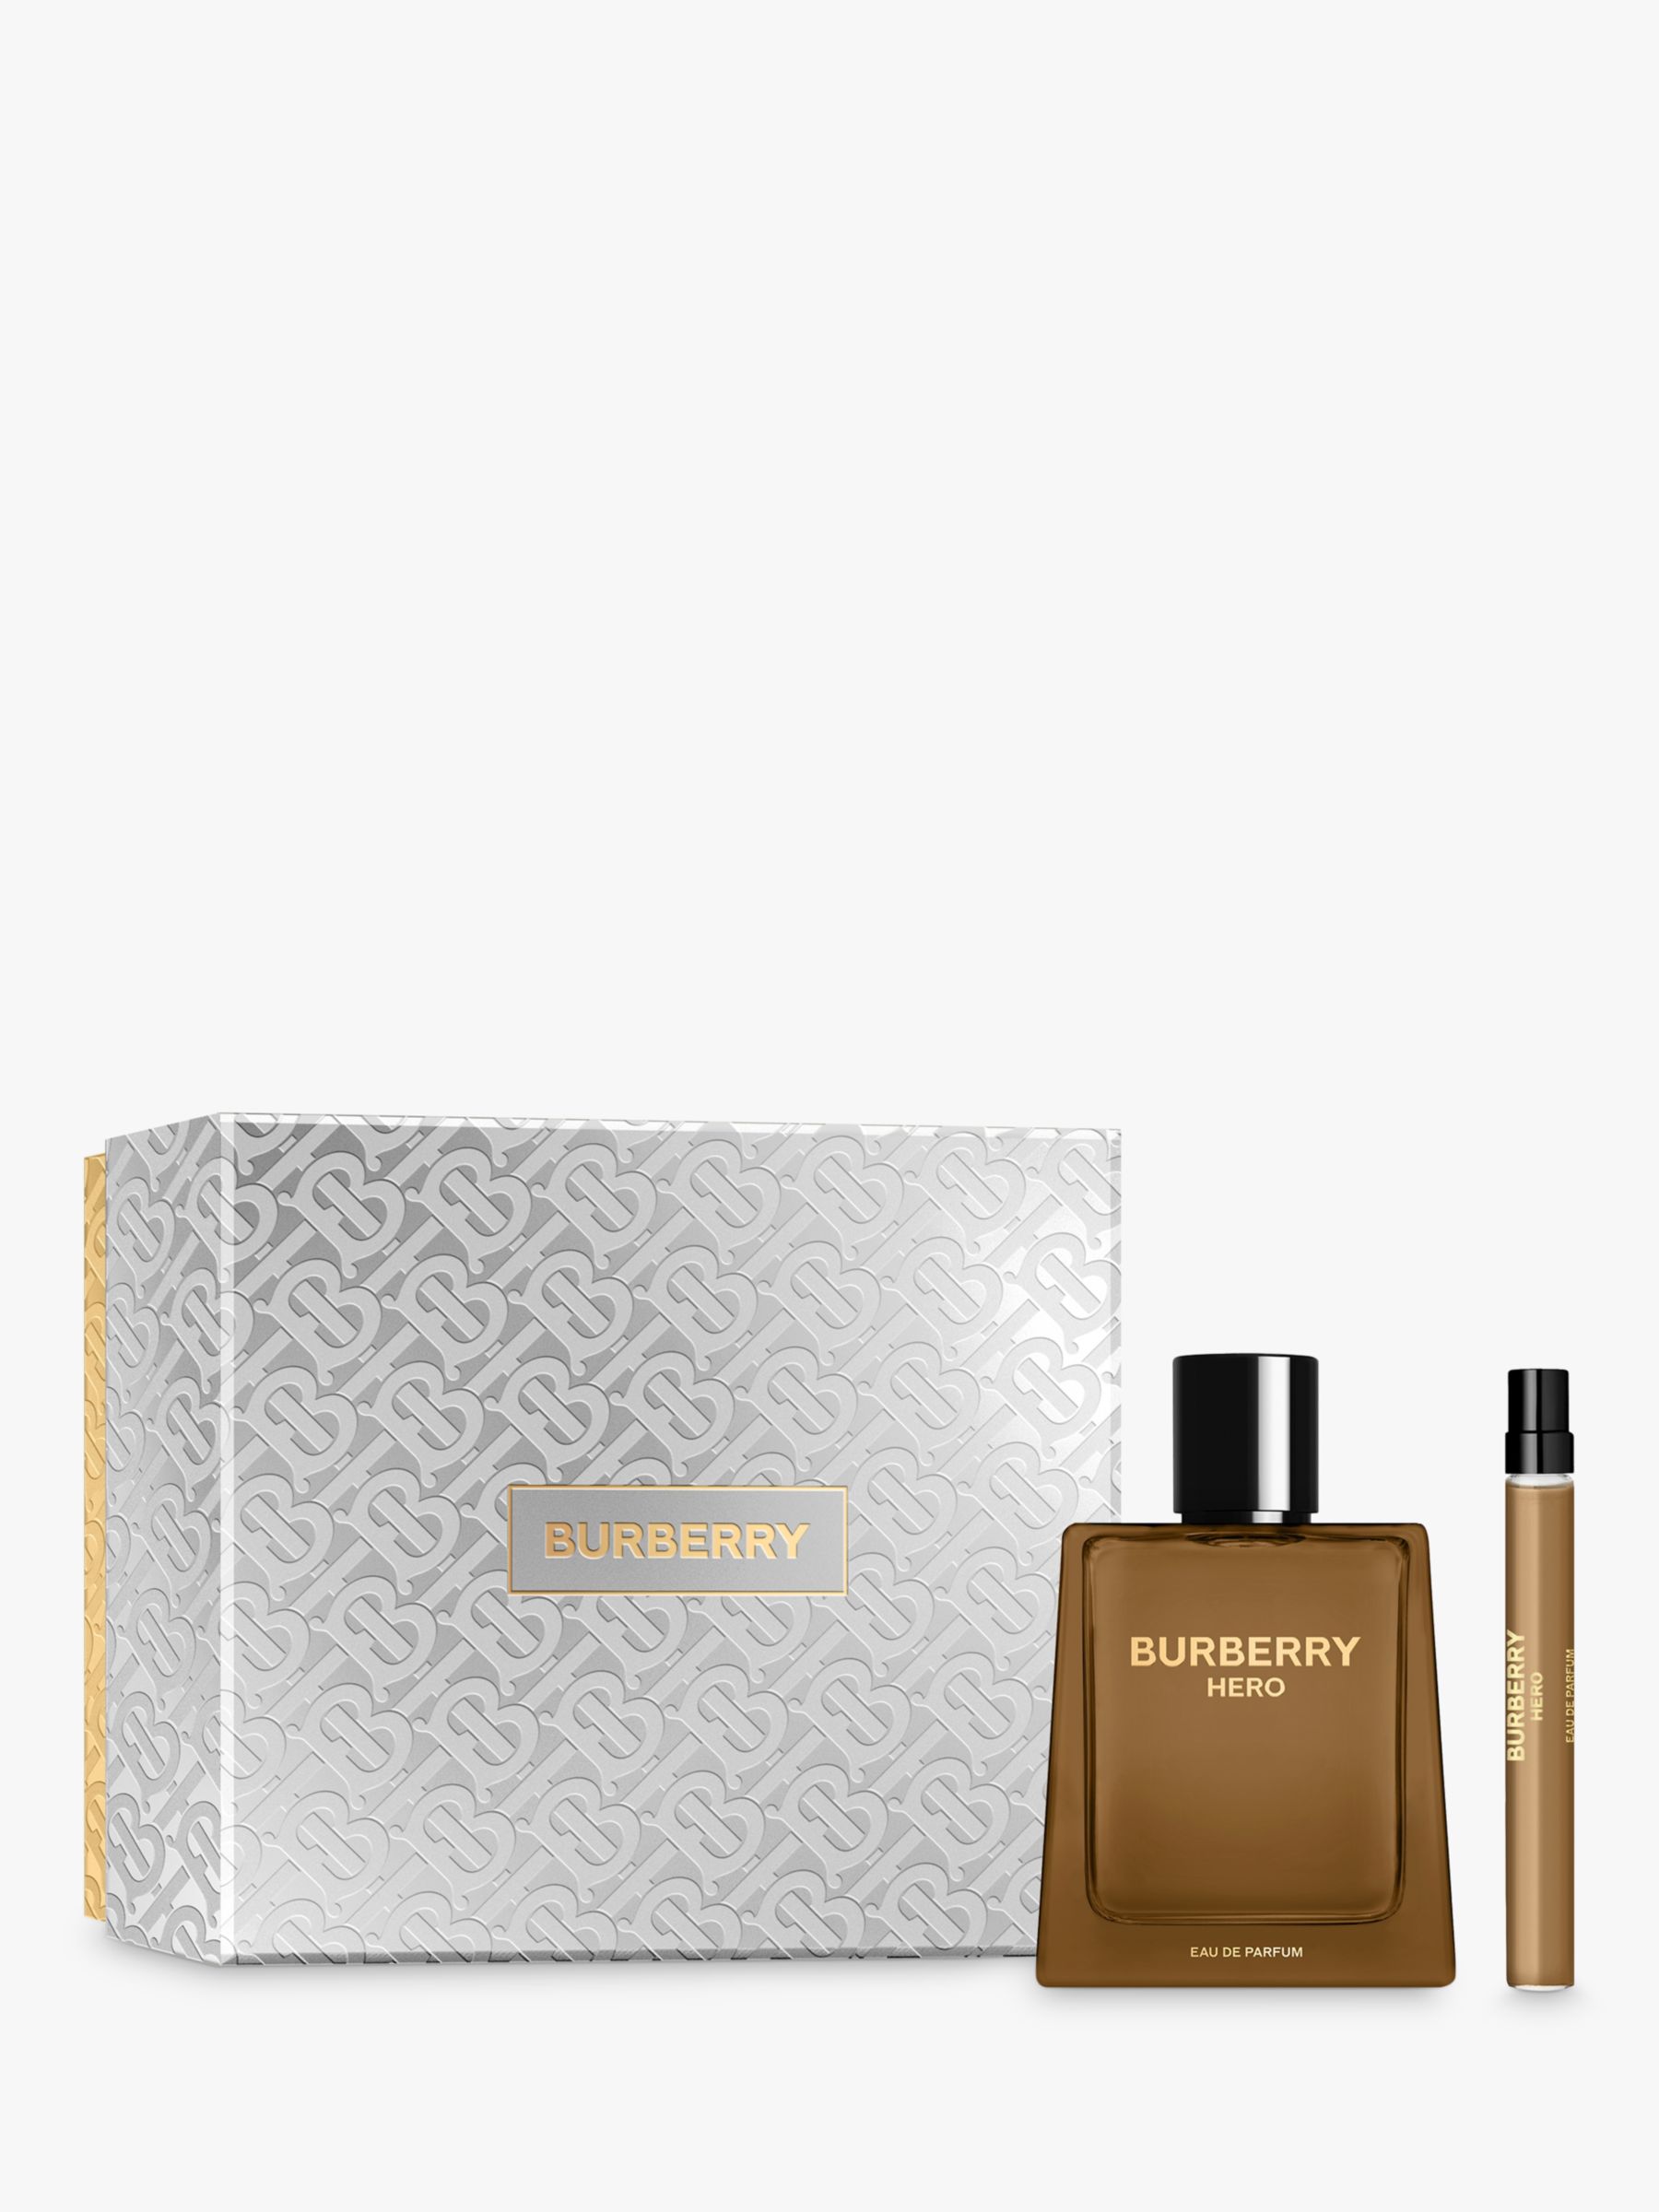 Burberry Hero Eau de Parfum 100ml Fragrance Gift Set